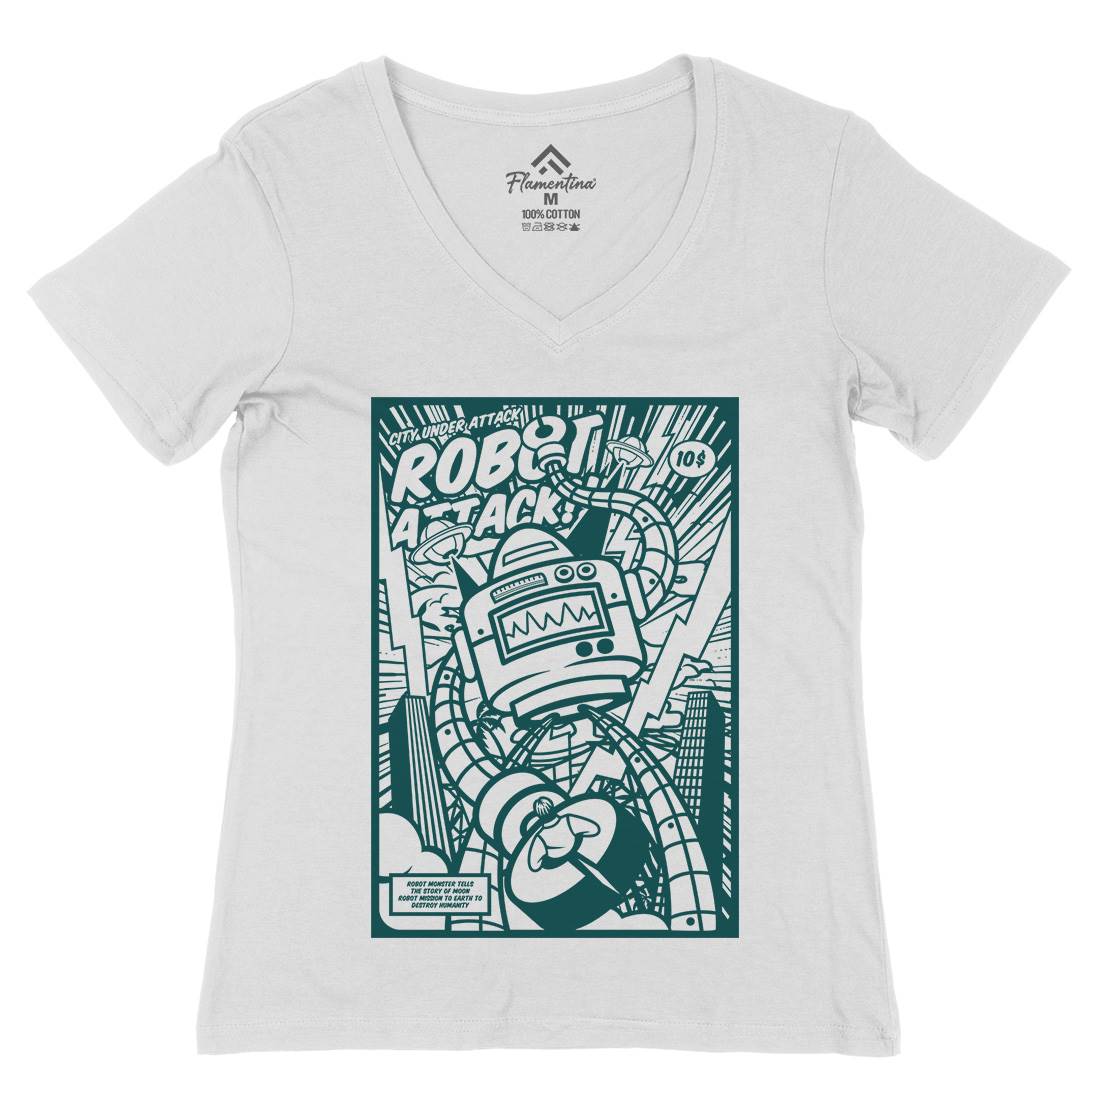 Robot Attack Womens Organic V-Neck T-Shirt Space A271